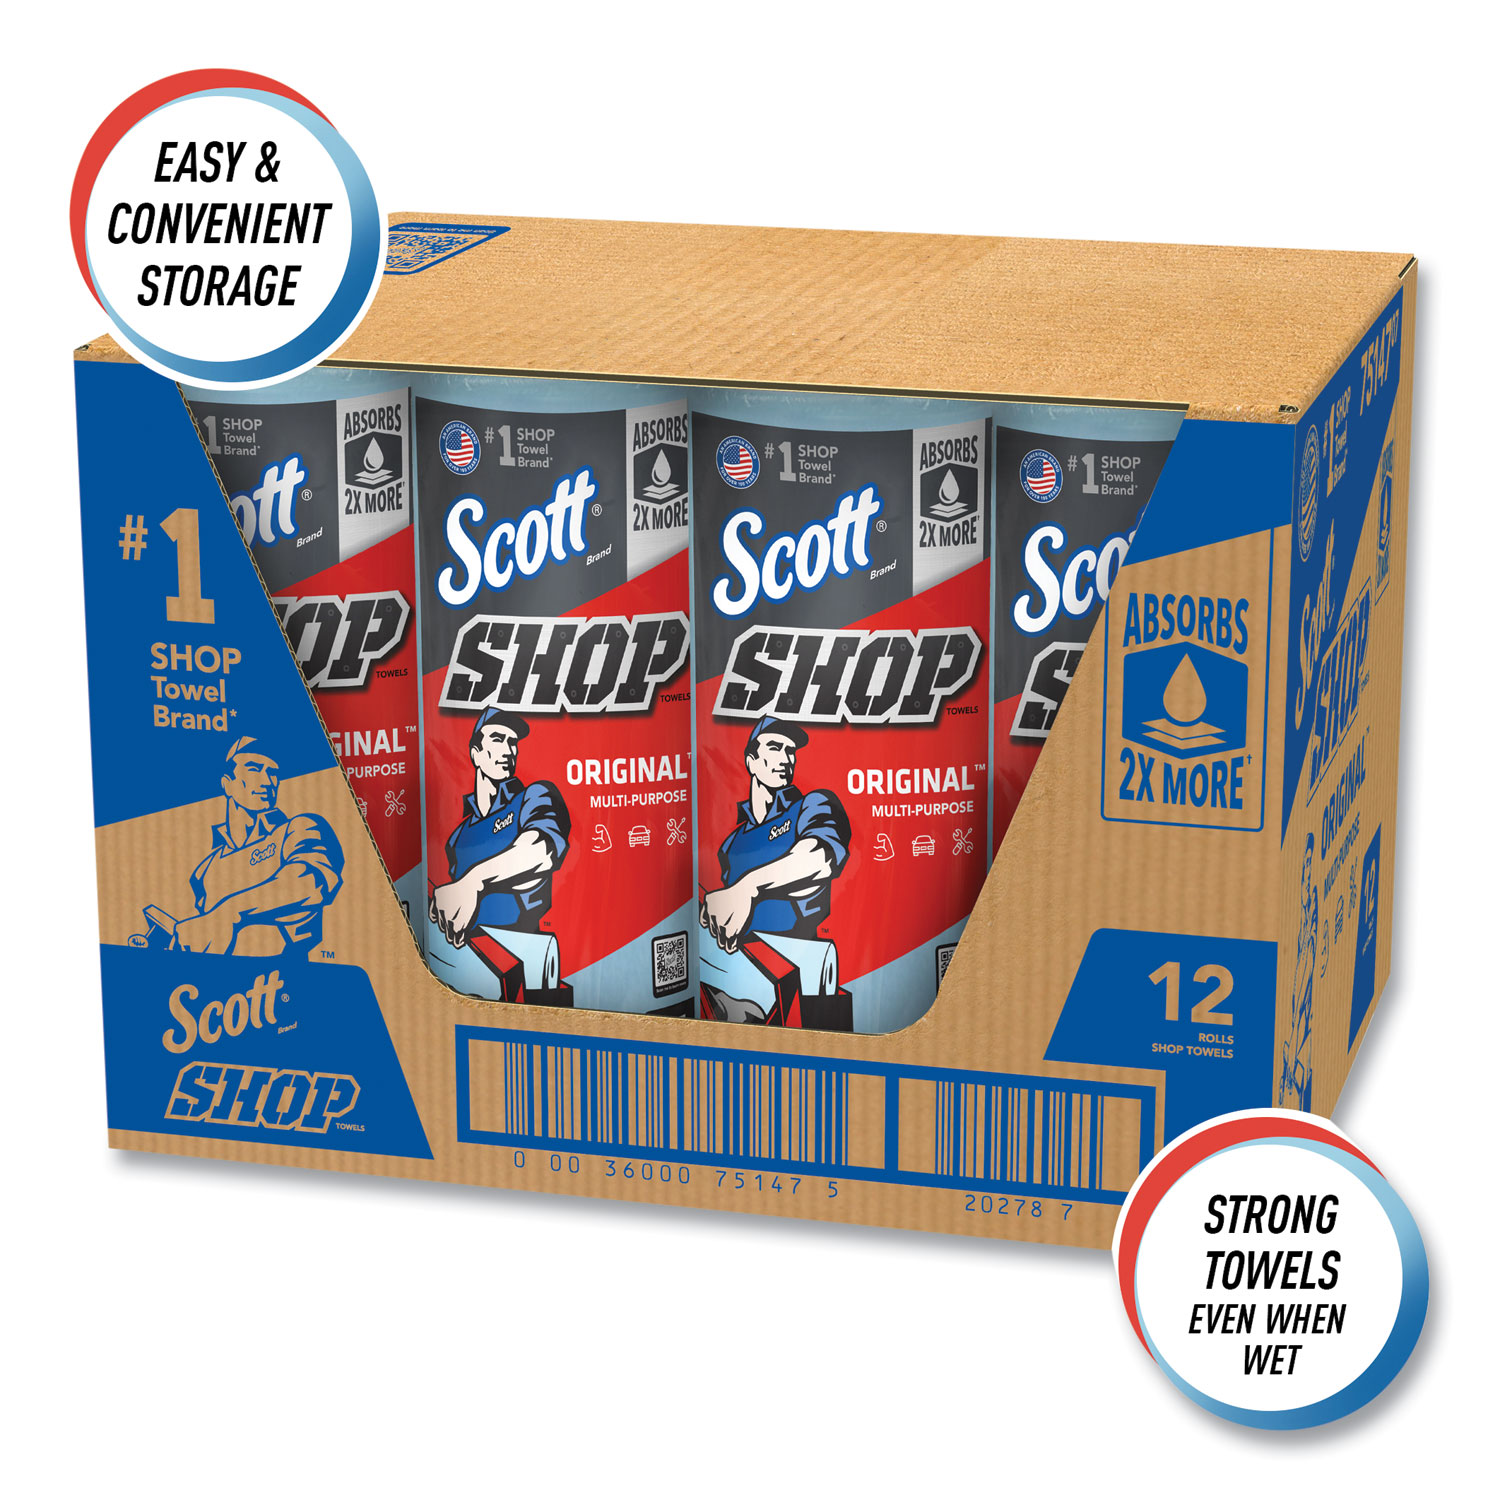 Scott Shop Towels (55/roll)